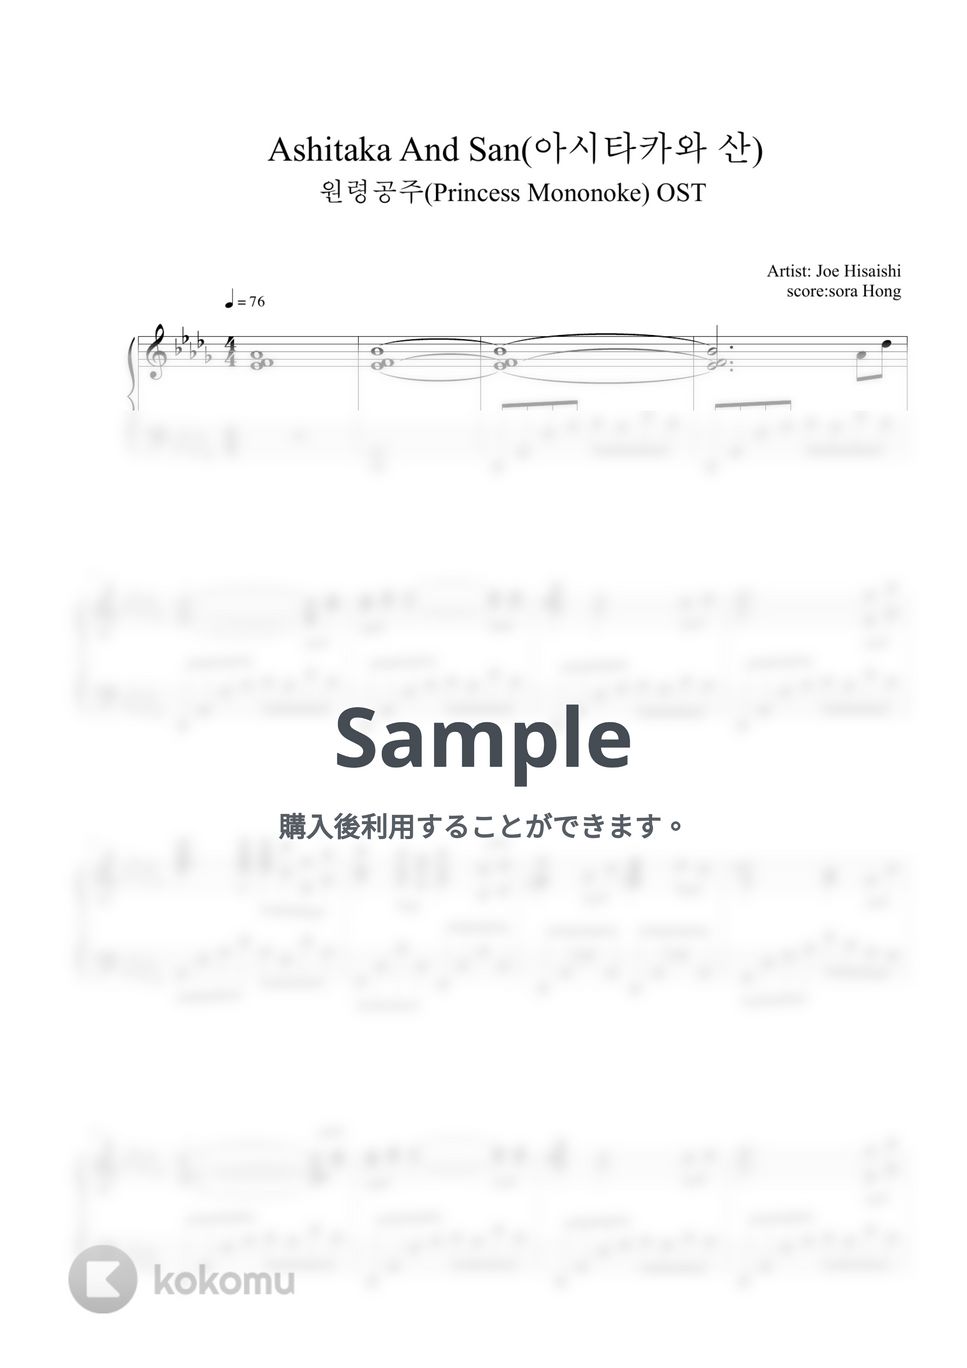 Joe Hisaishi - アシタカとサン (Ashitaka and San) (Db,Dkey) (Princess Mononoke OST) by sora Hong